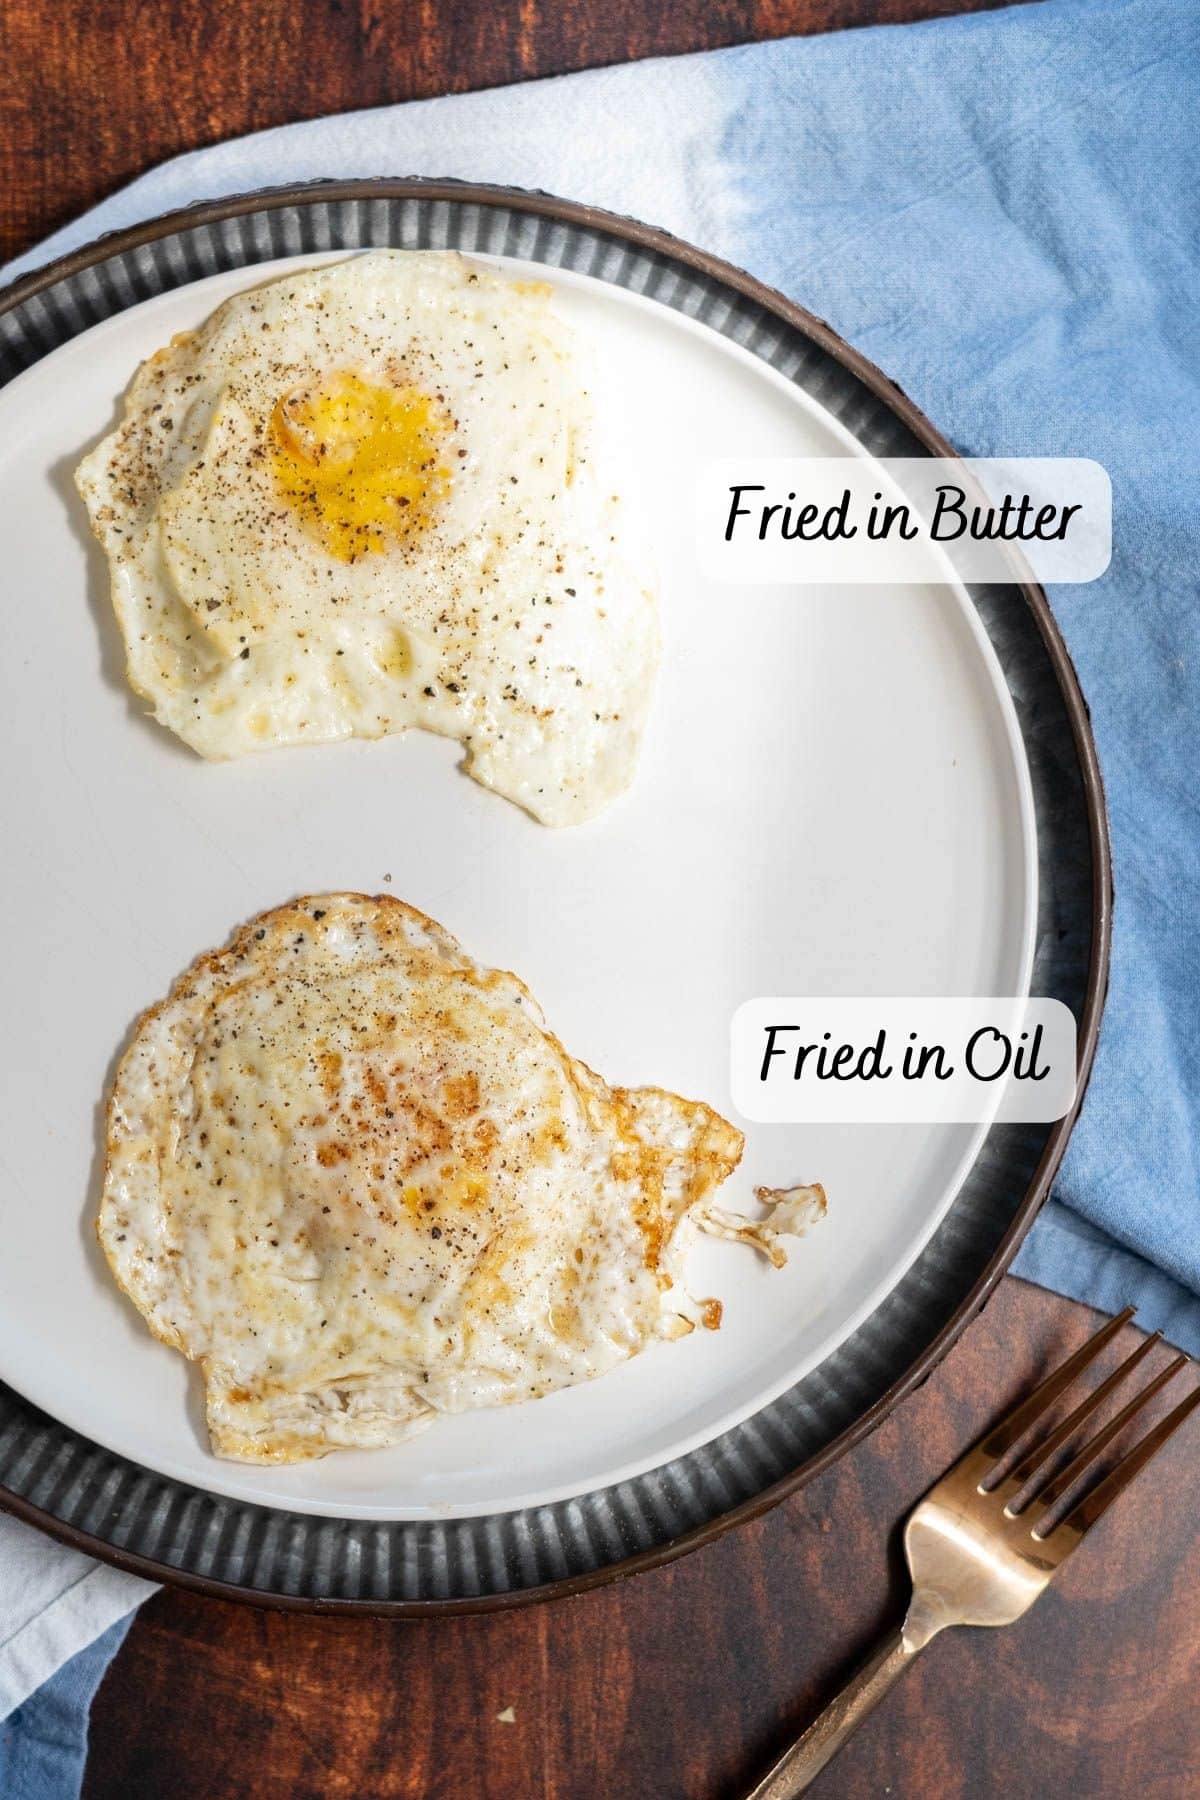 Eggs fried in oil versus butter.